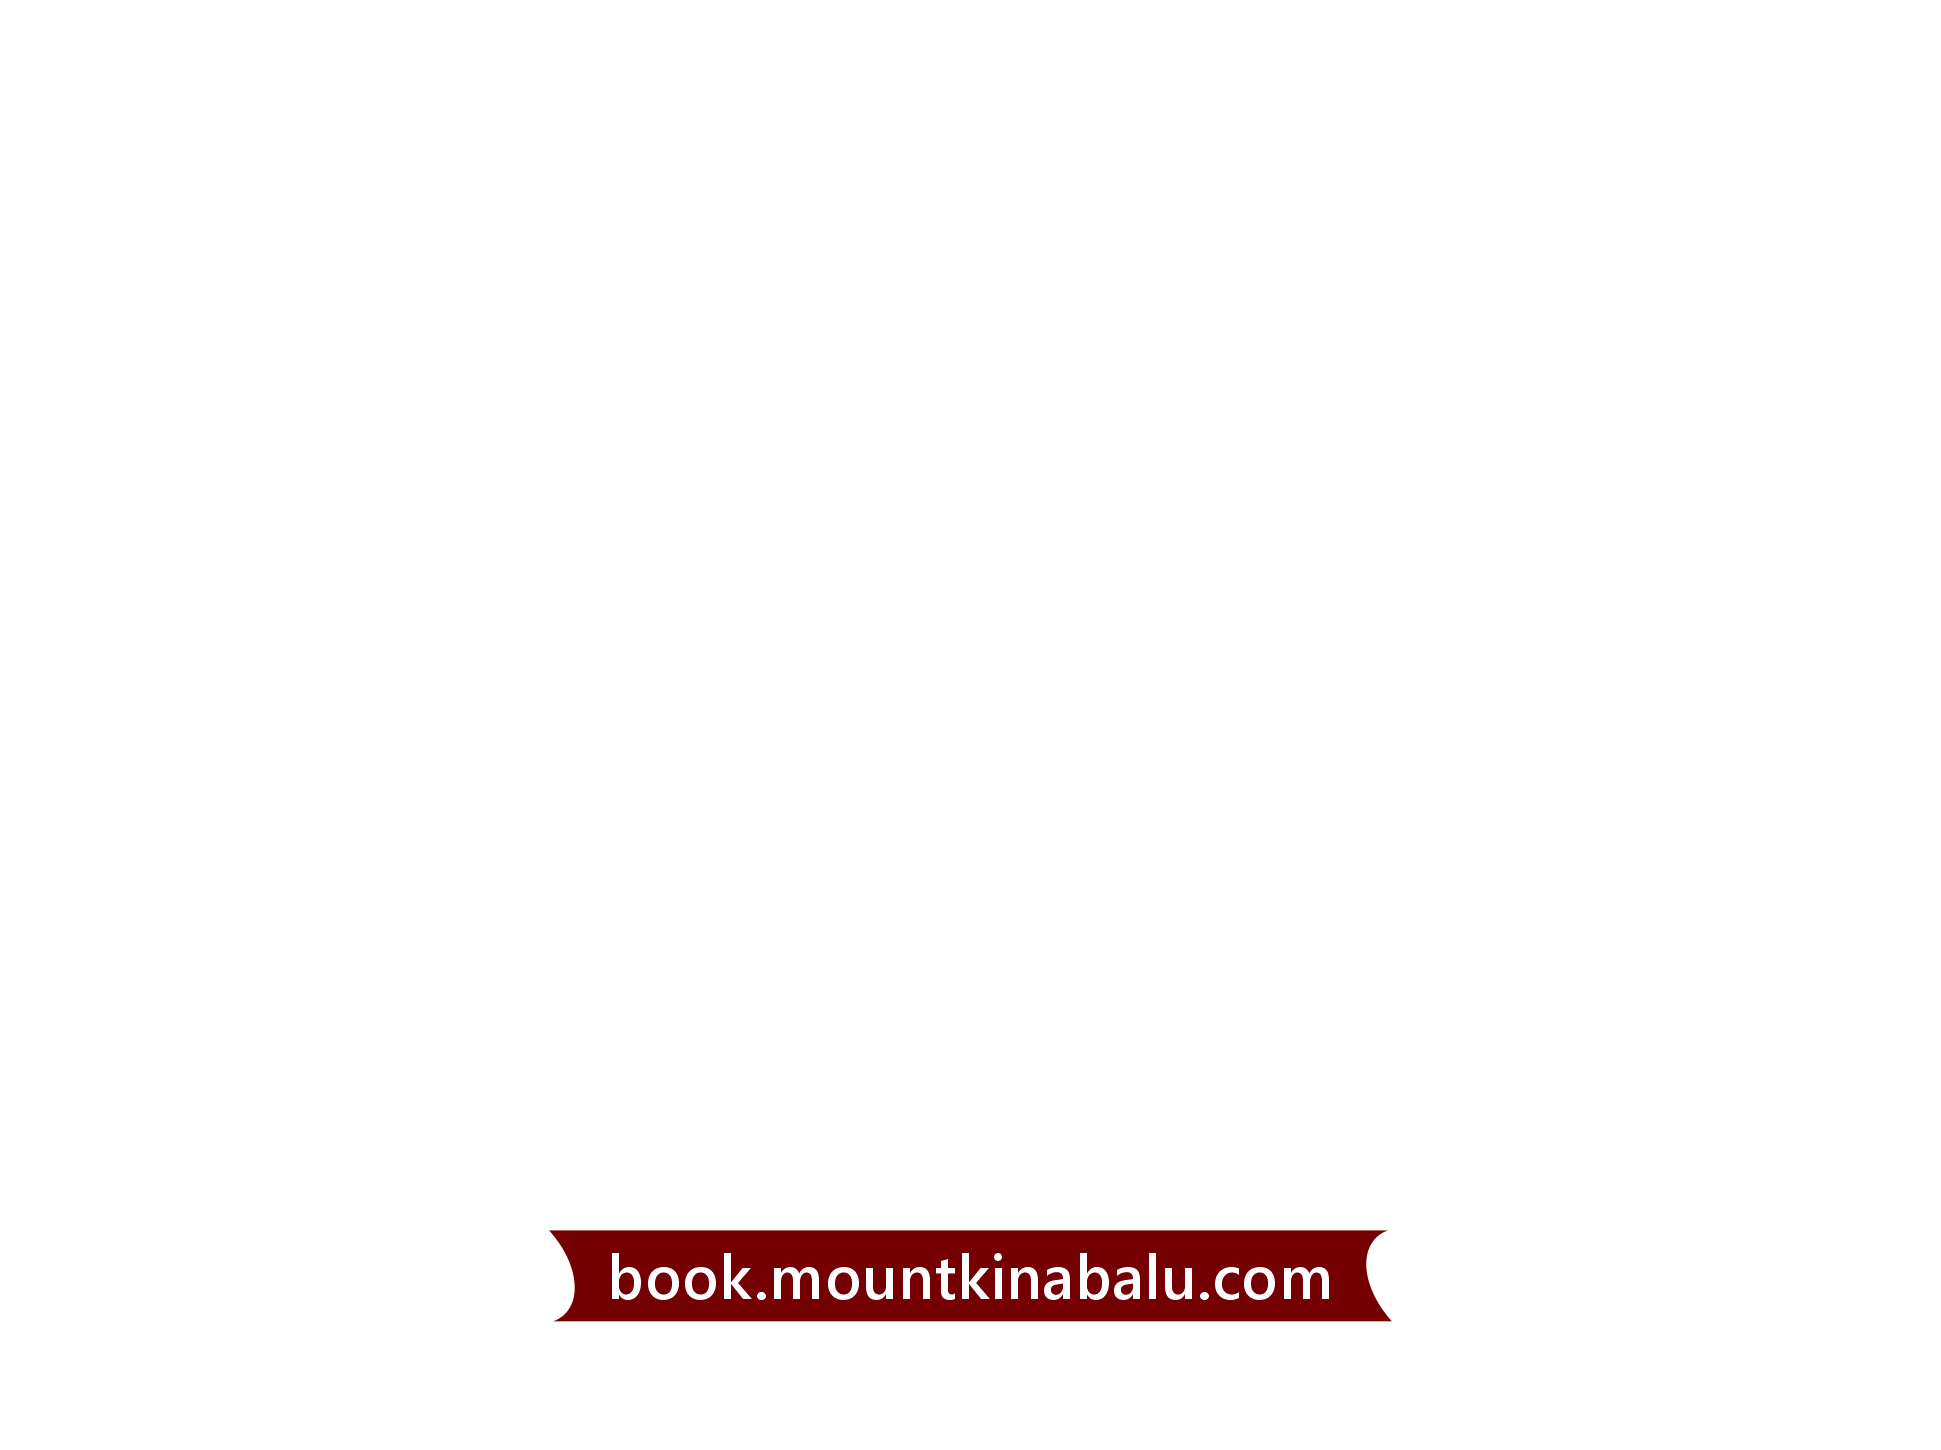 Mount Kinabalu Crazy Promo 2022 - Price from MYR1130